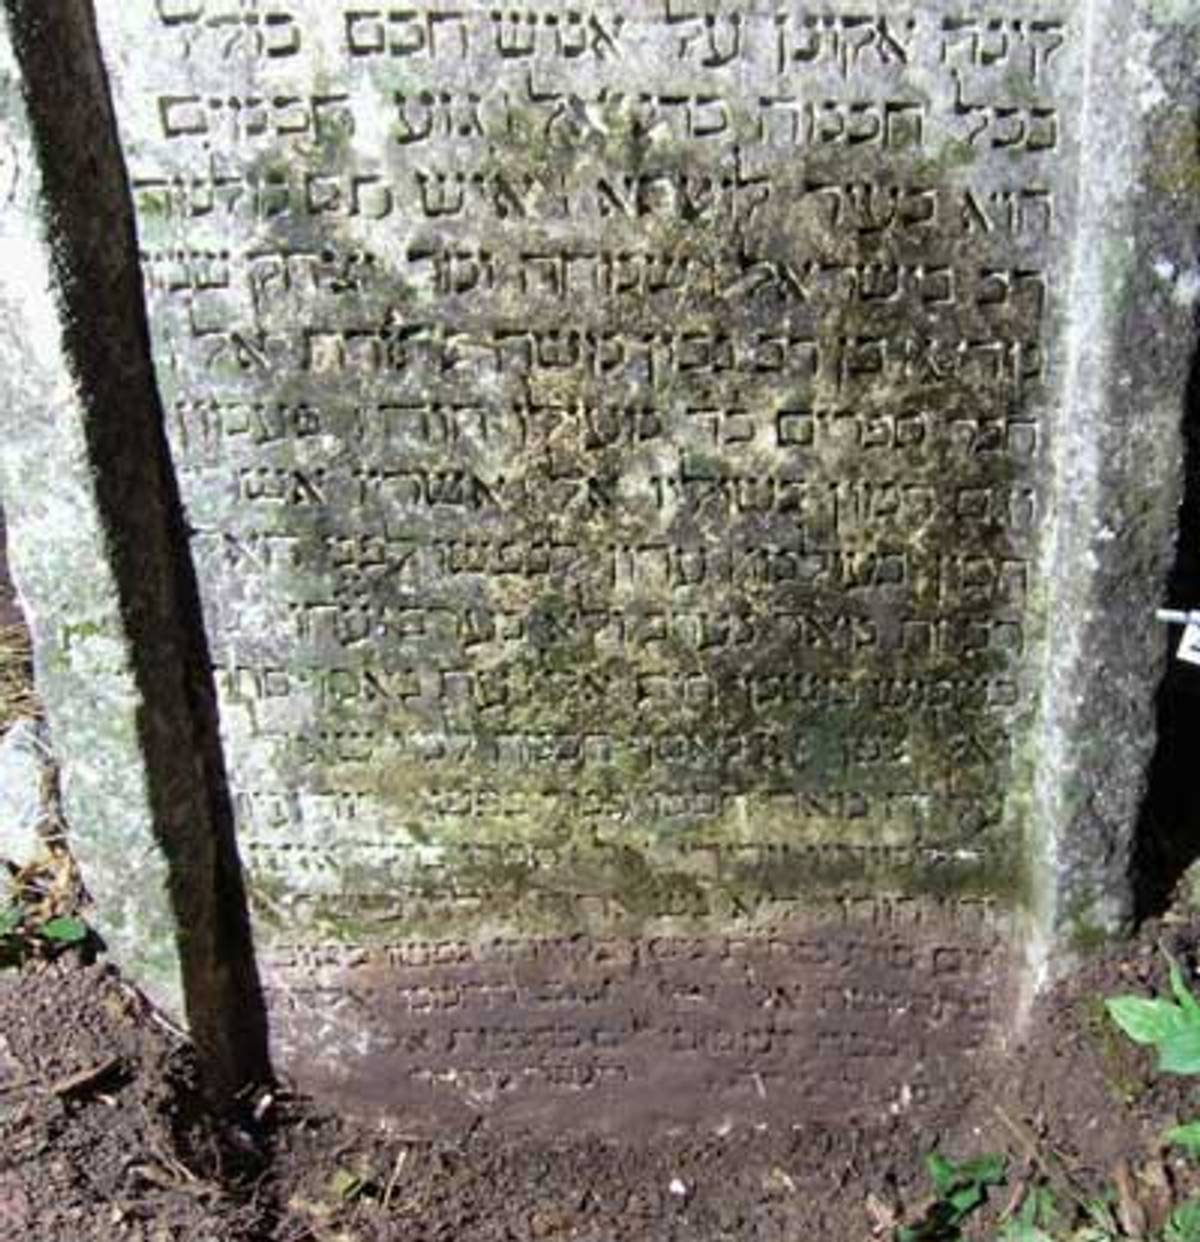 Simhah Isaac Lutski’s headstone in Chufut-Kale.